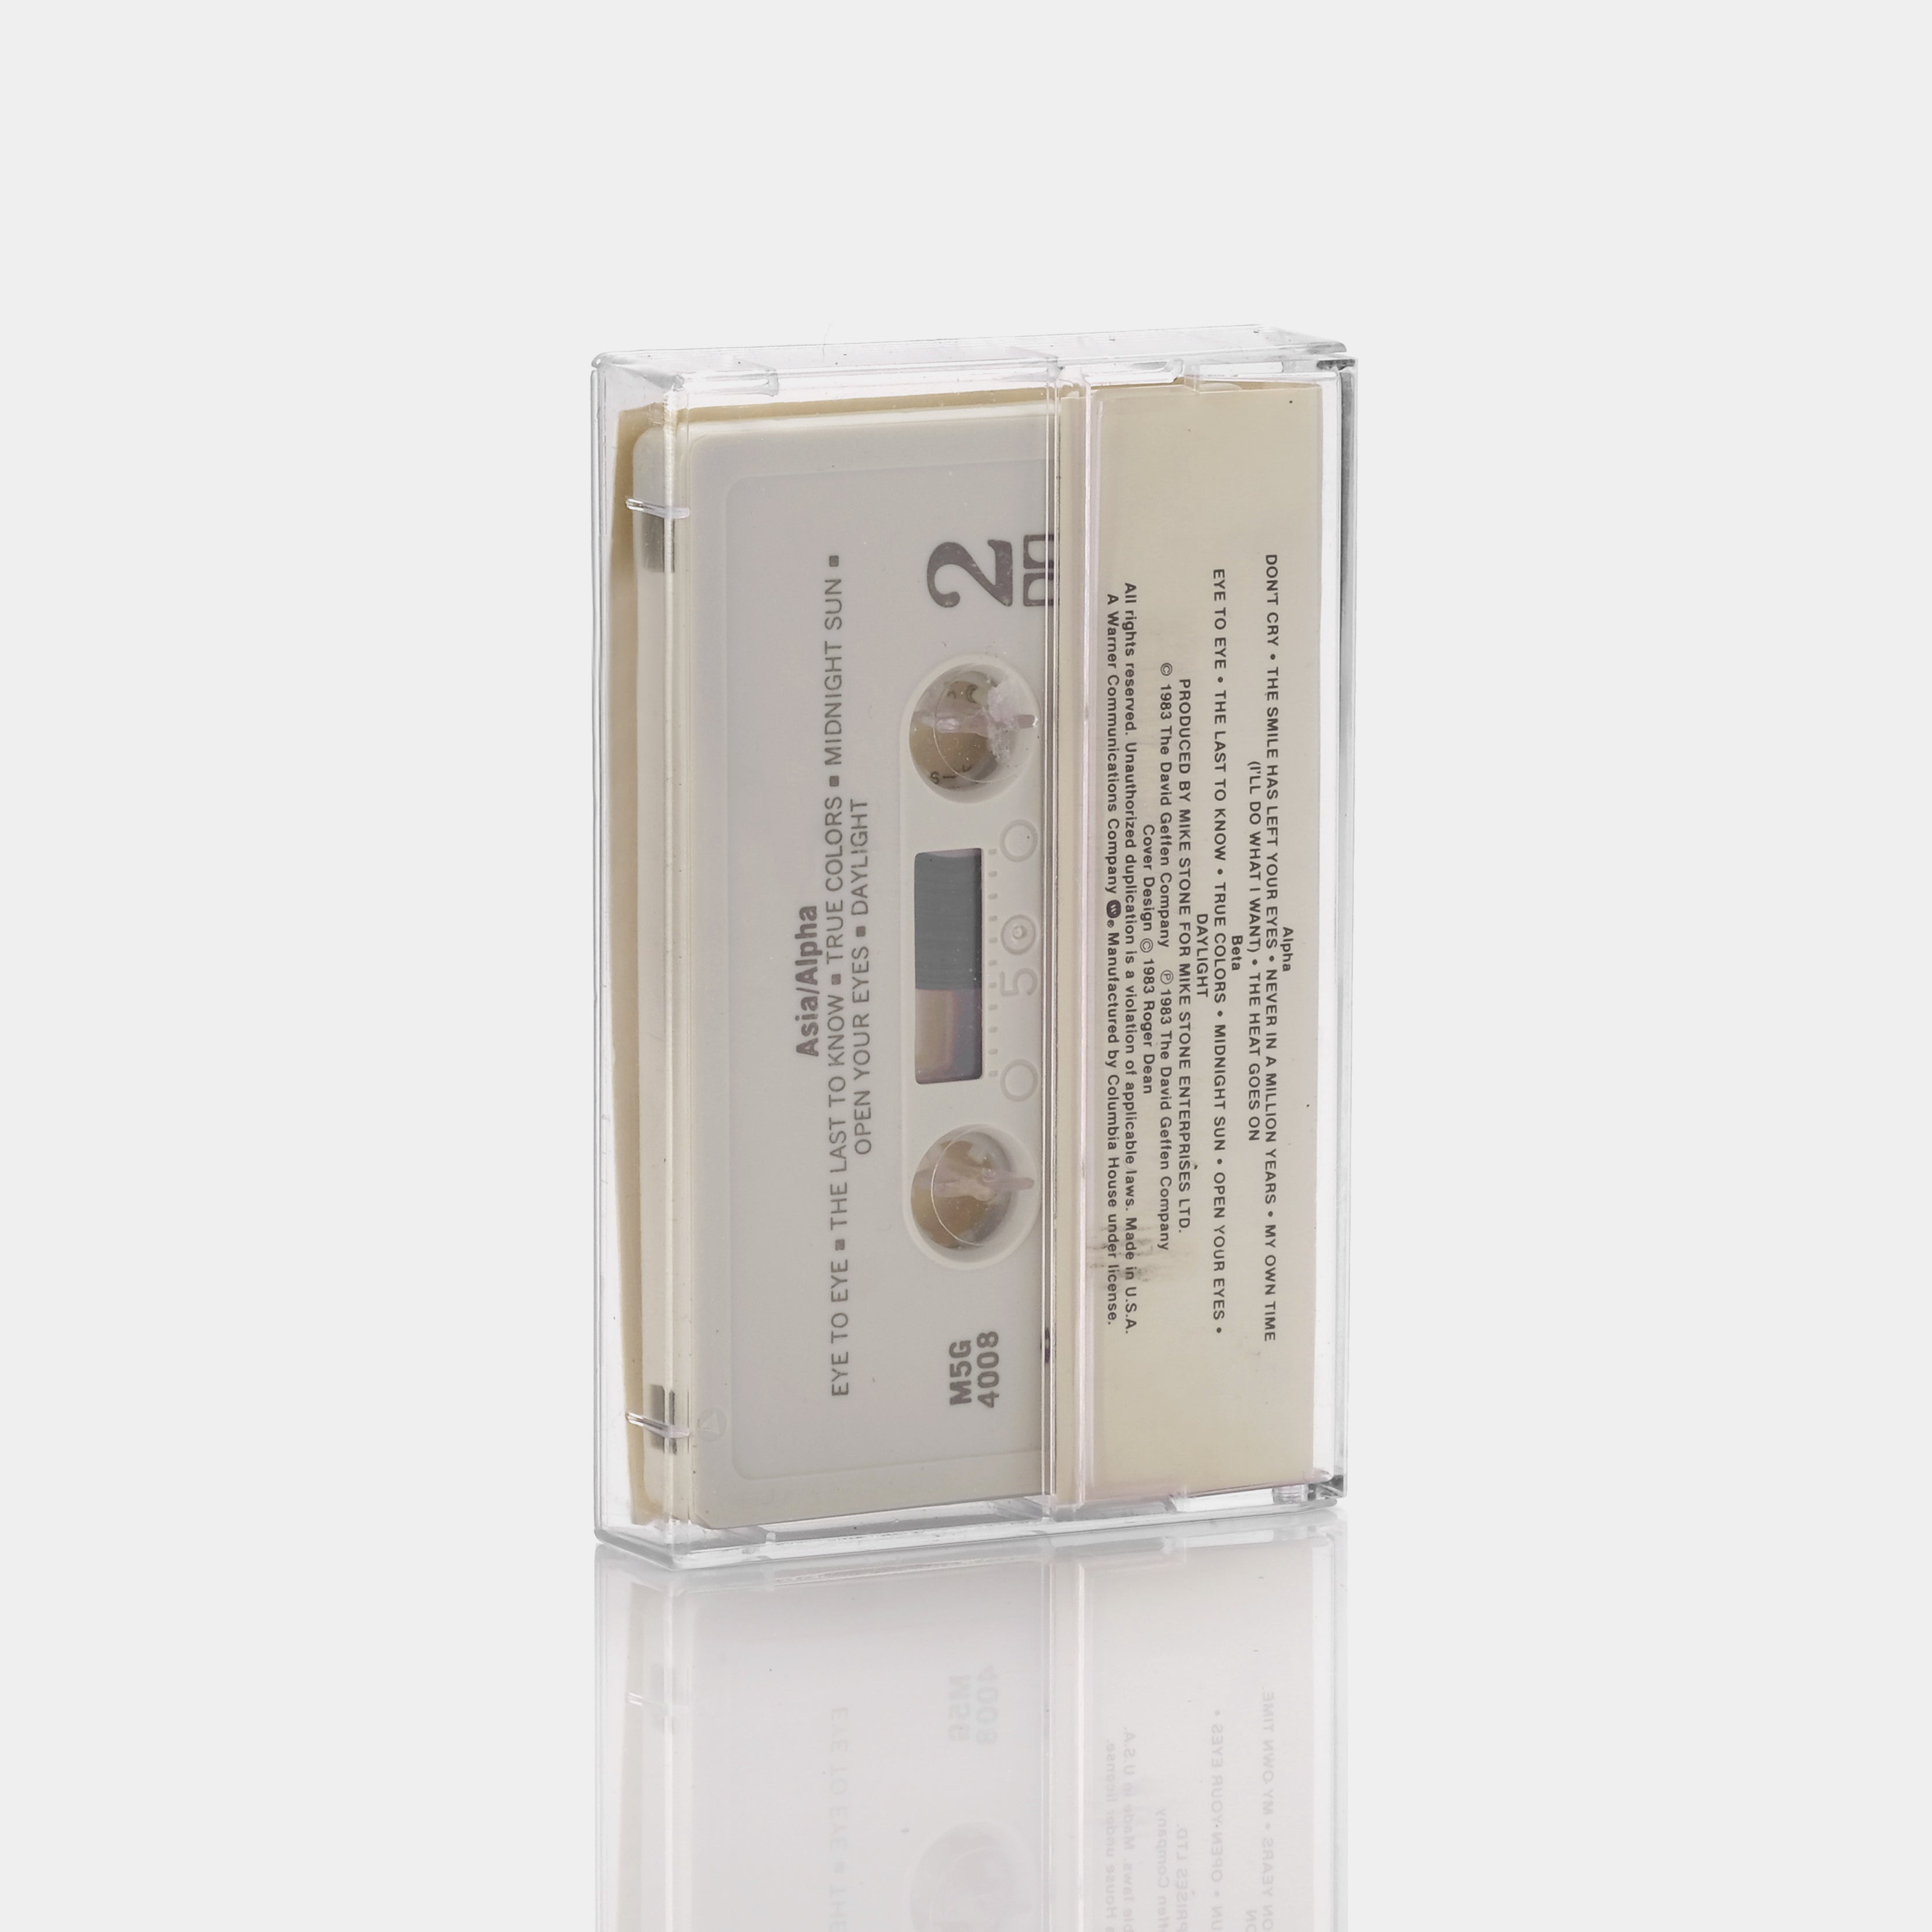 Asia - Alpha Cassette Tape